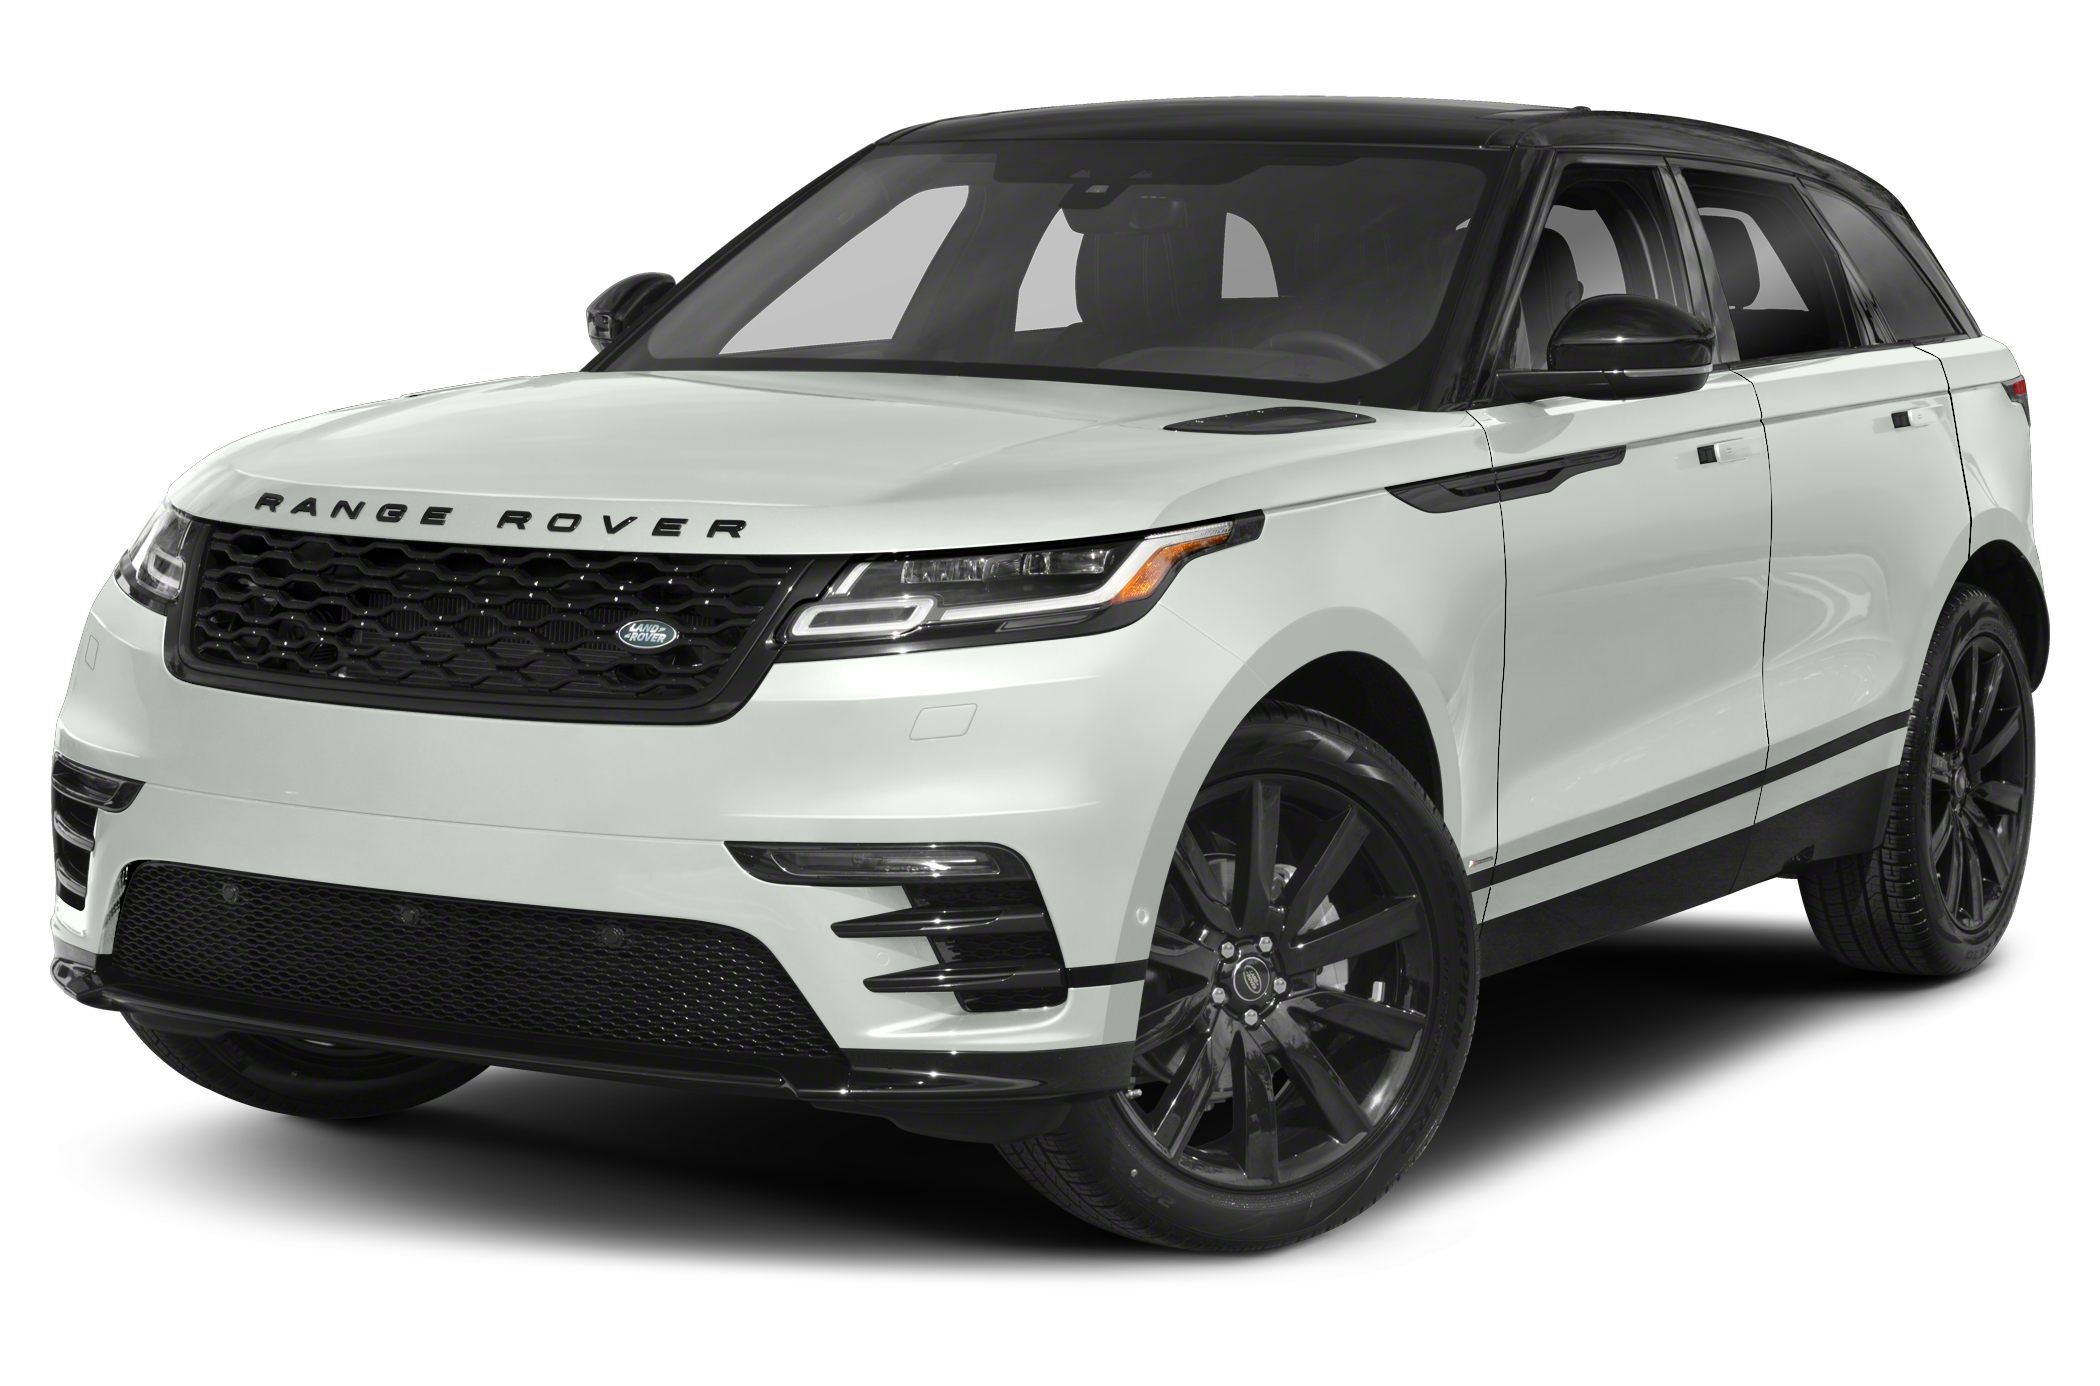 2018 Land Rover Range Rover Velar Review - Autoblog